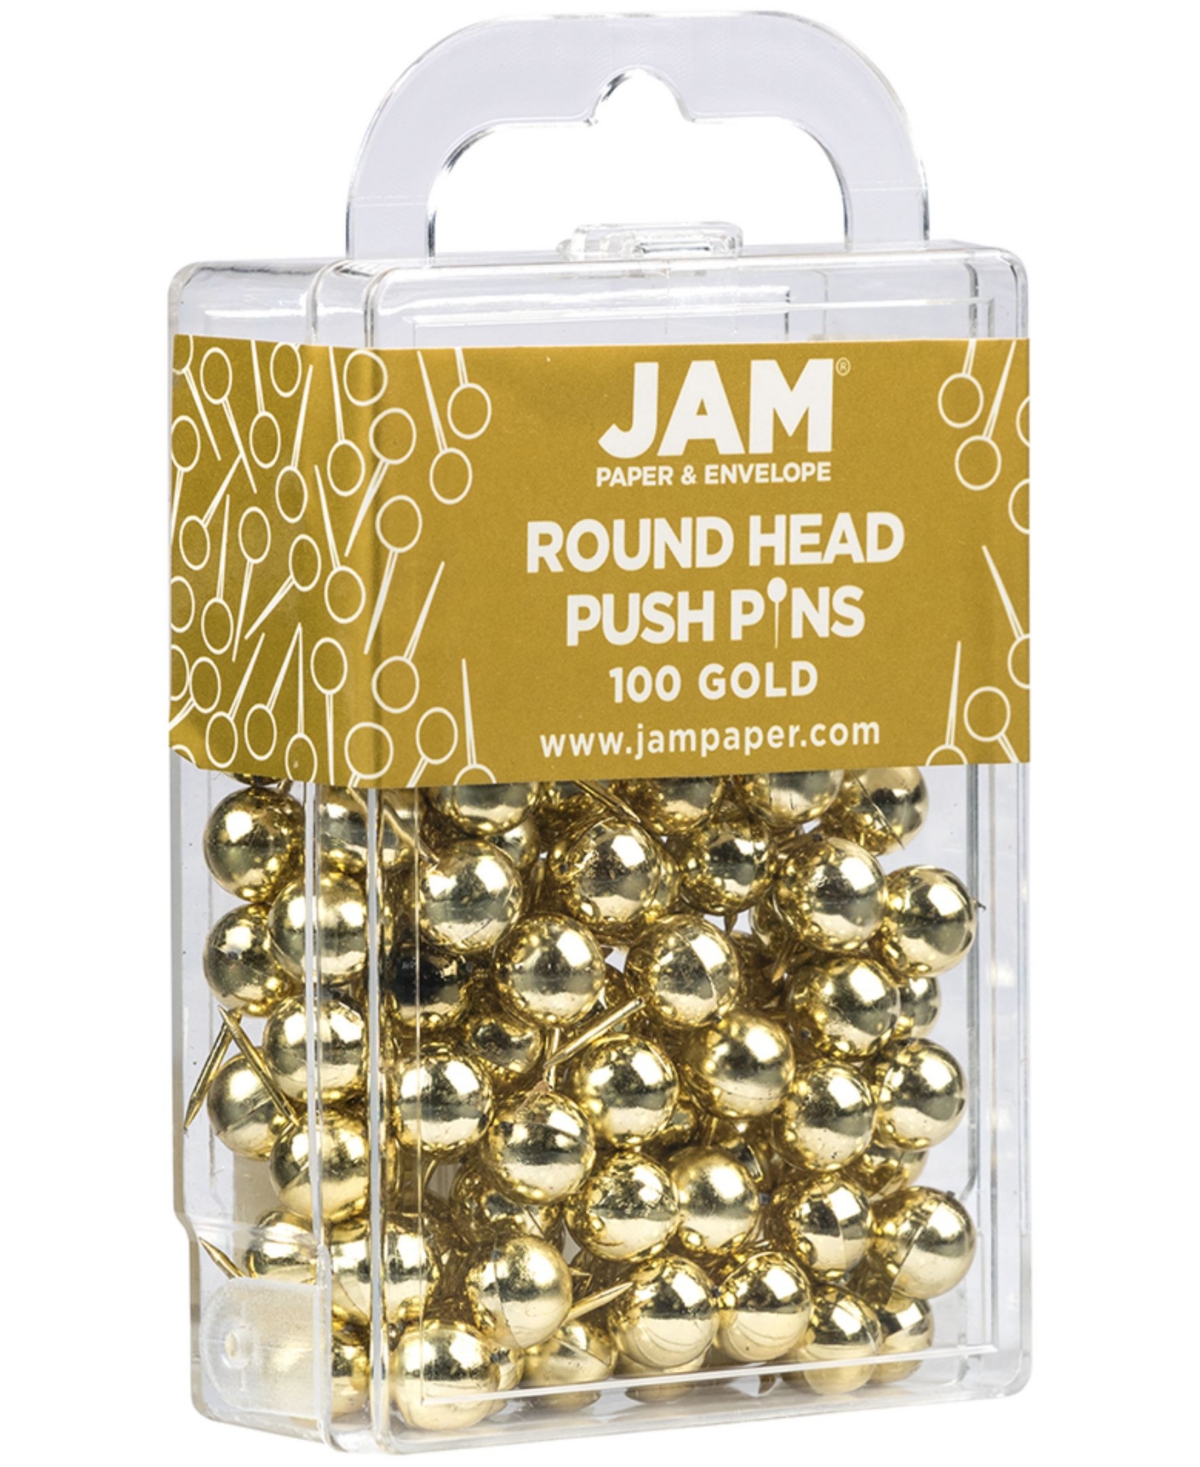 100 Count Rose Gold Wall Push Pins - Clear Plastic Head Thumbtacks